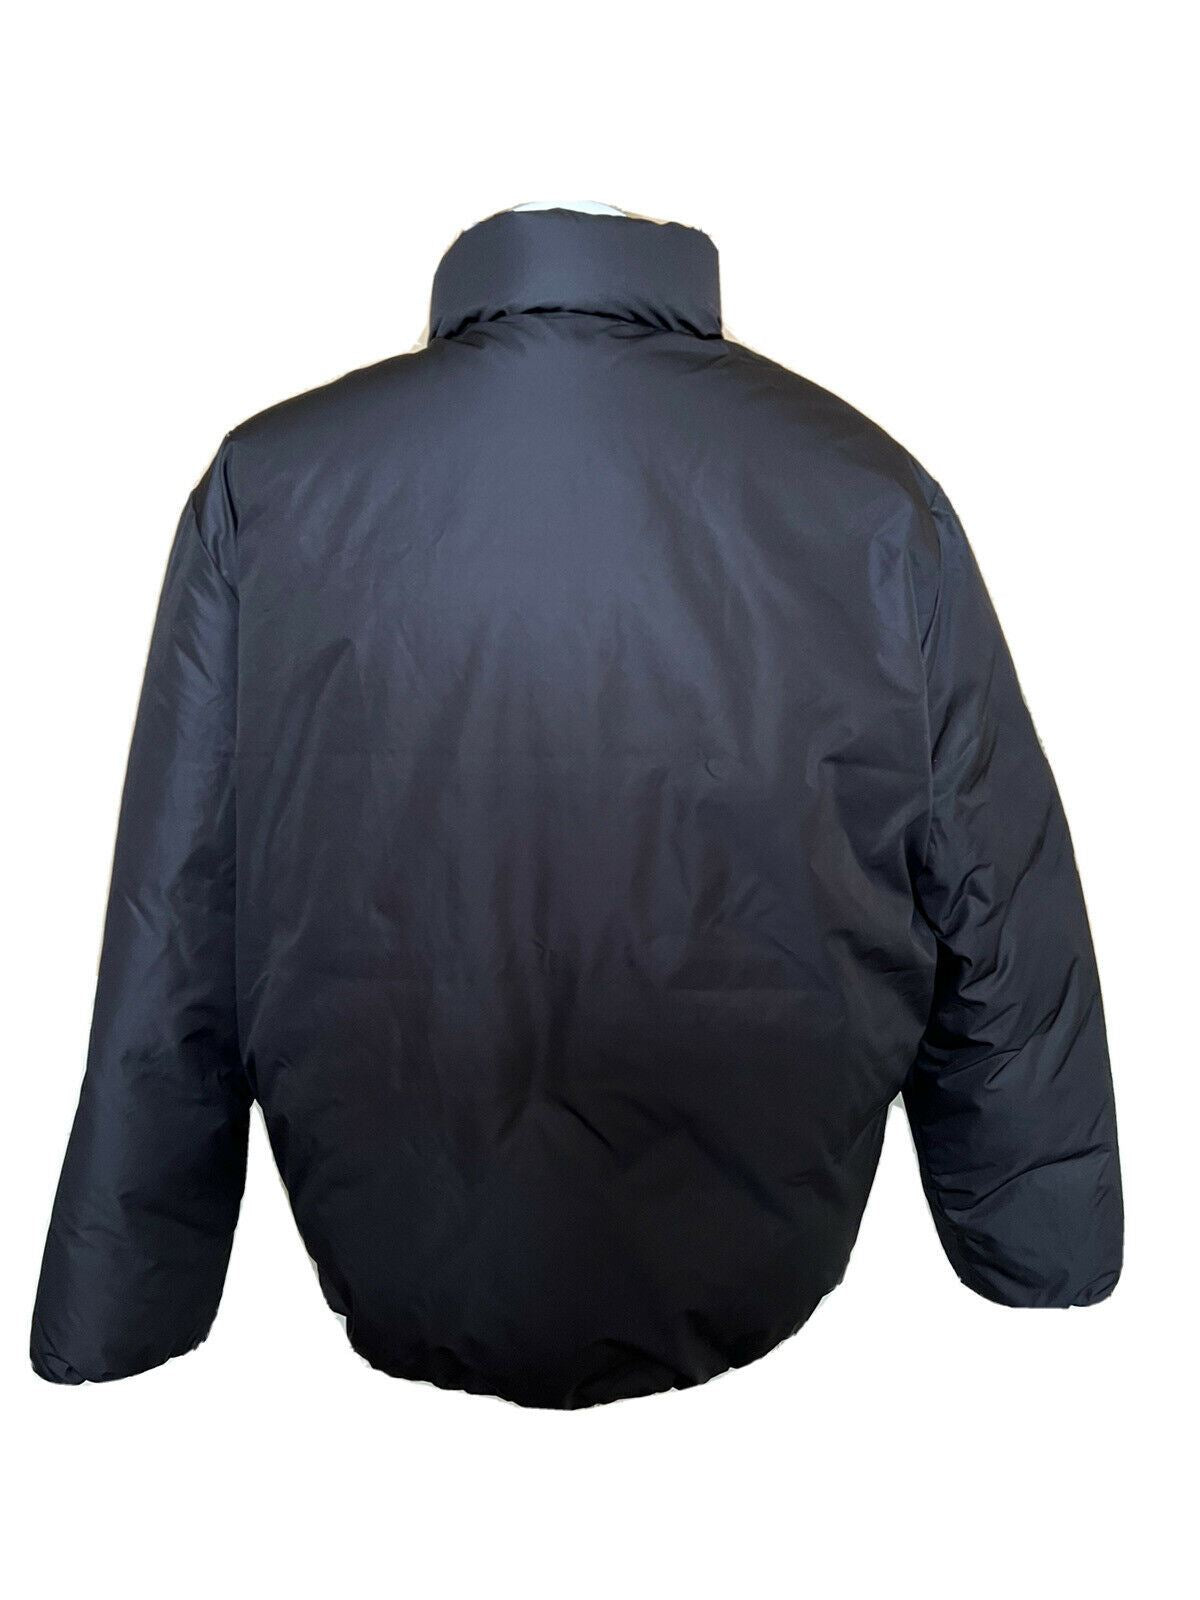 Мужская черная парка-куртка Polo Ralph Lauren Alpine, размер NWT 498 долларов США